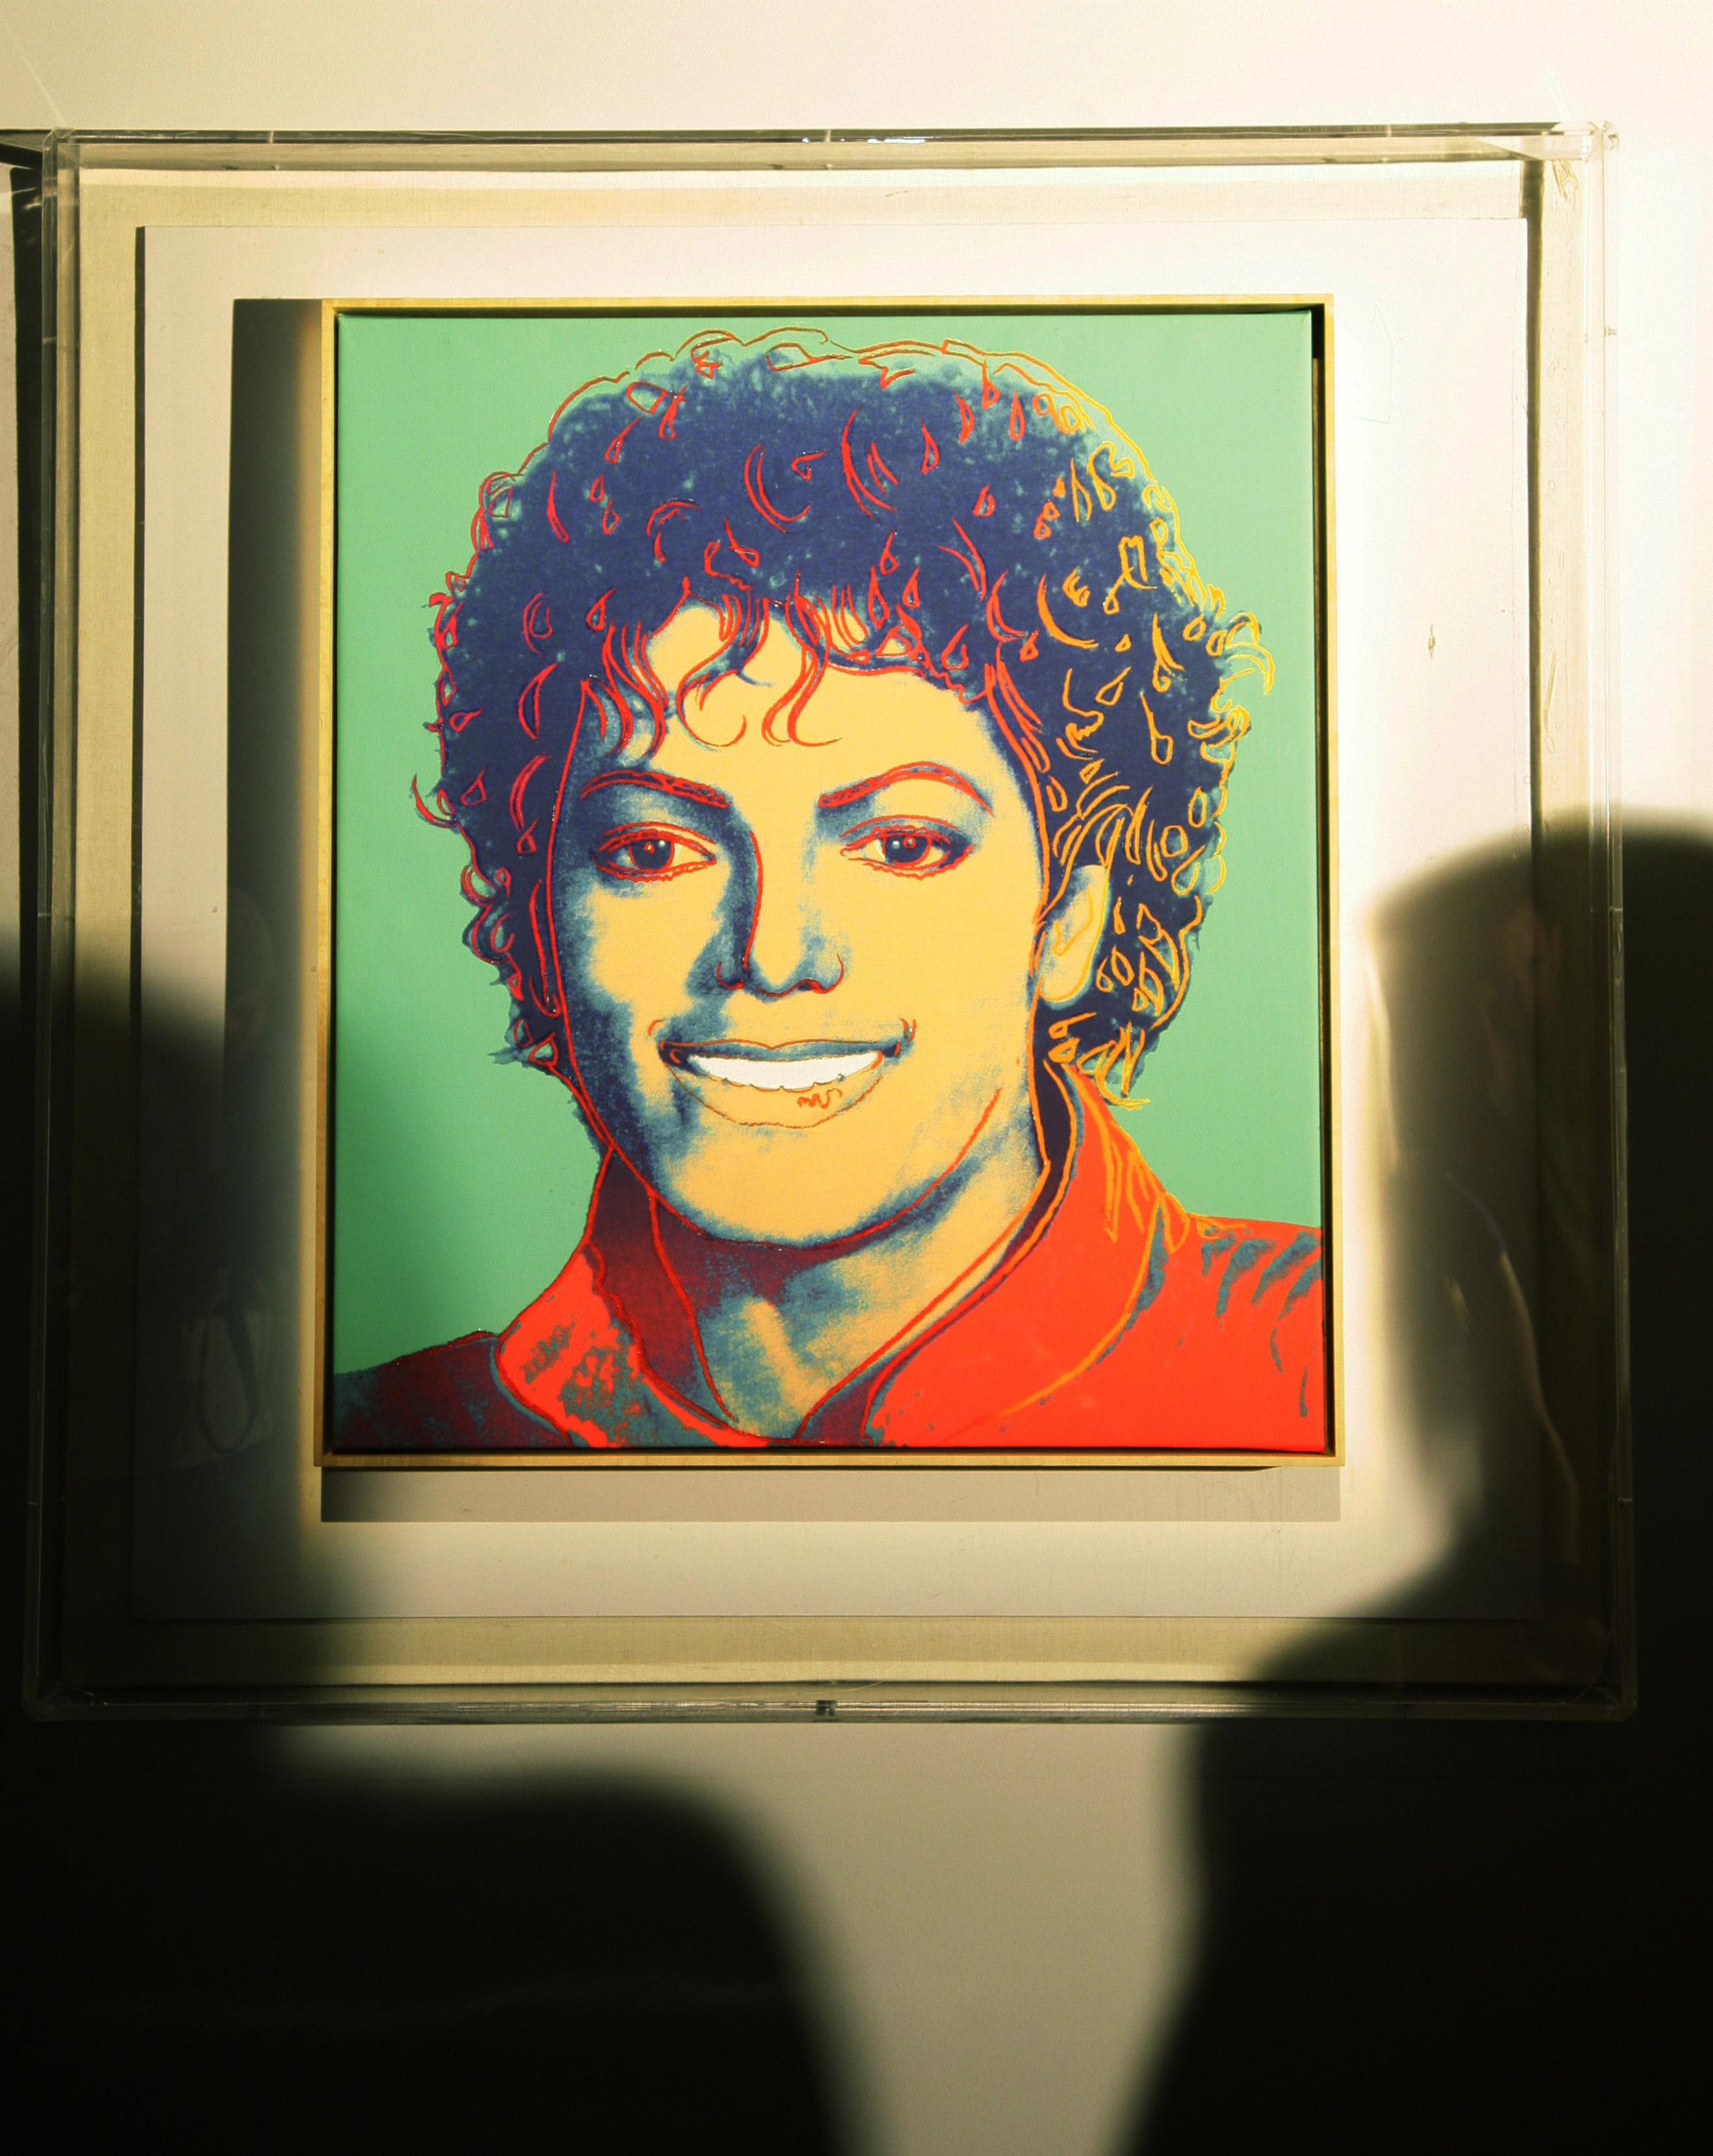 A Warhol painting of Michael Jackson